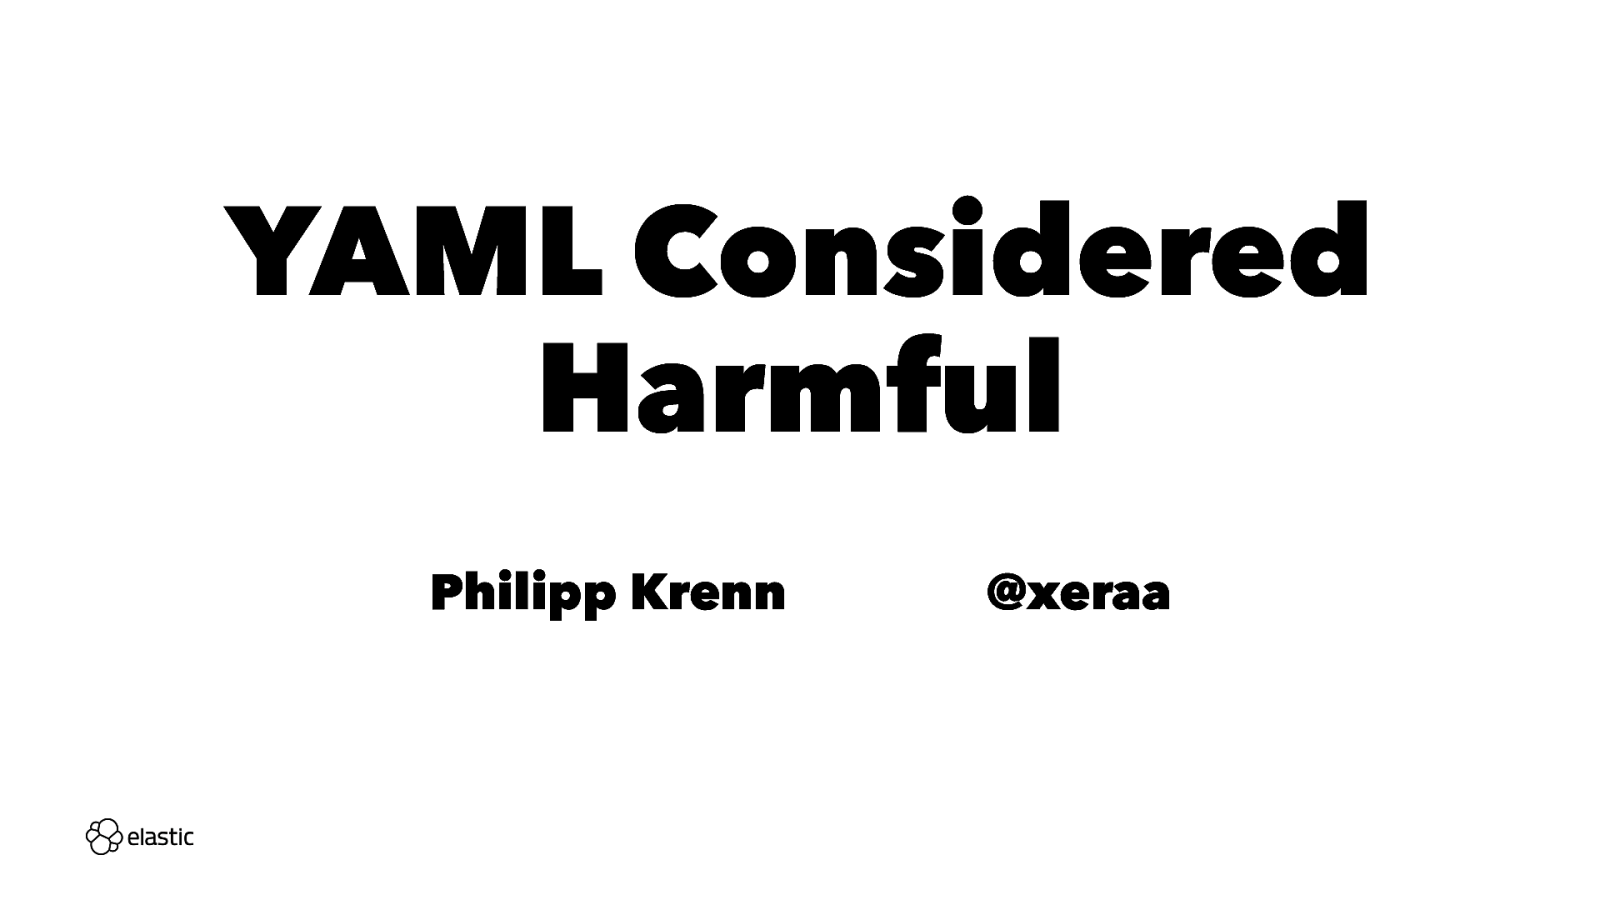 YAML Considered Harmful